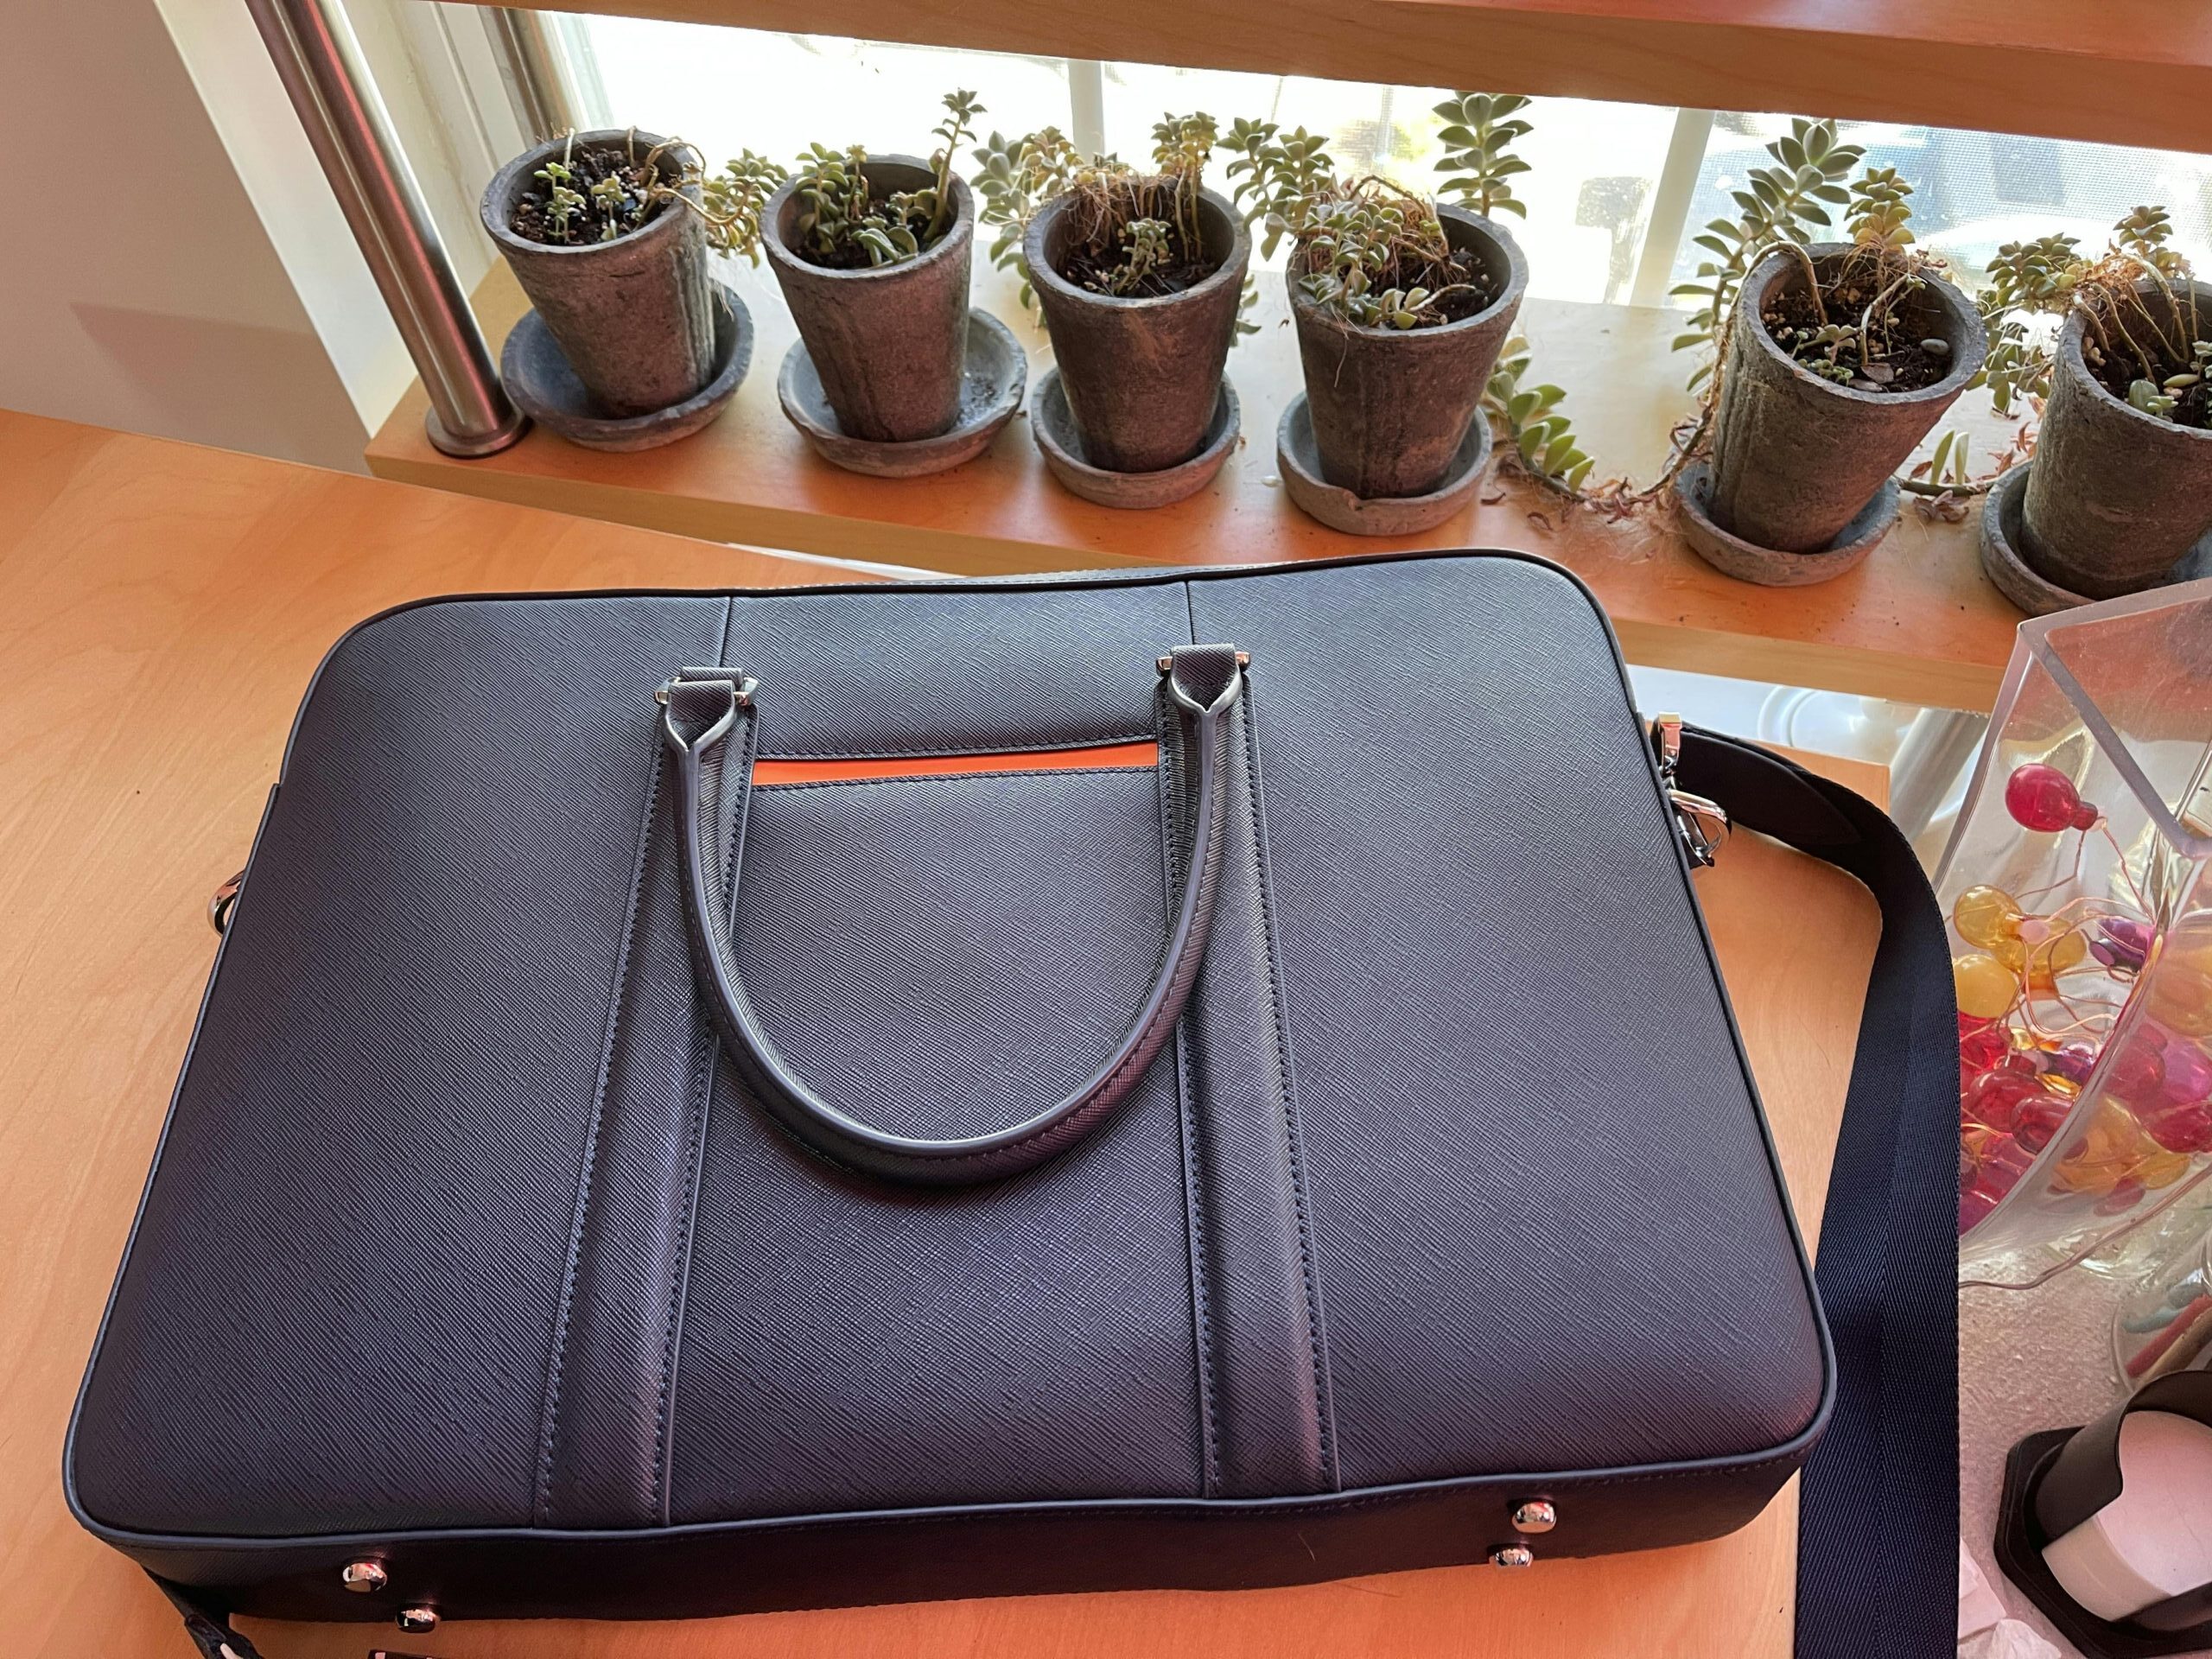 Classy Blue Leather Double-Zip Laptop Briefcase Bag Review